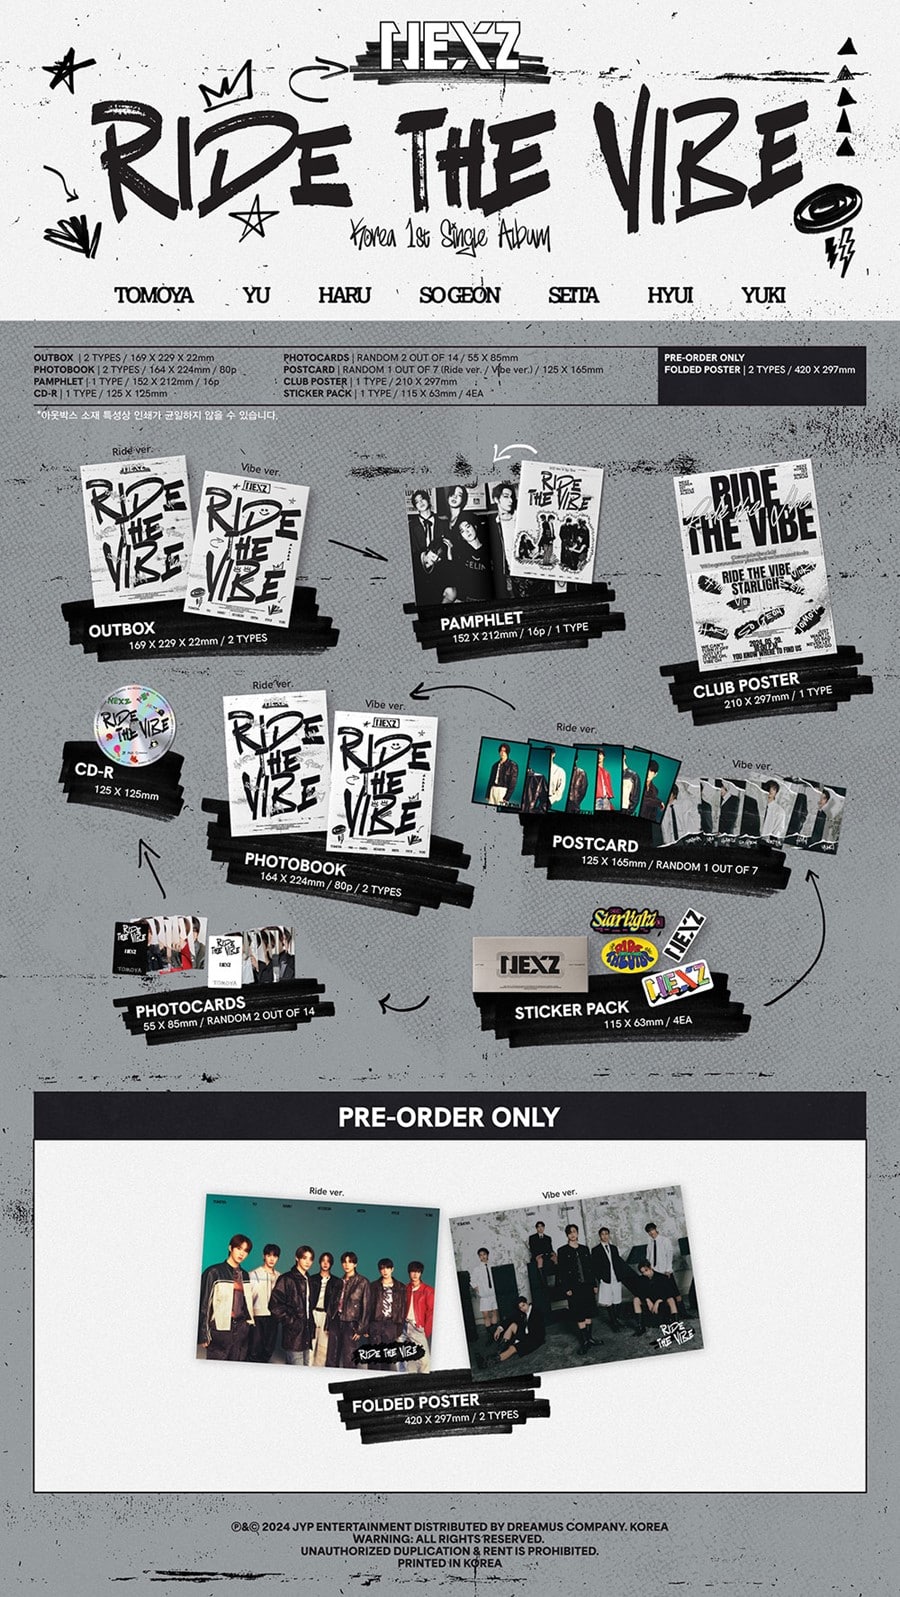 nexz-korea-1st-single-album-ride-the-vide-standard-ver-wholesales